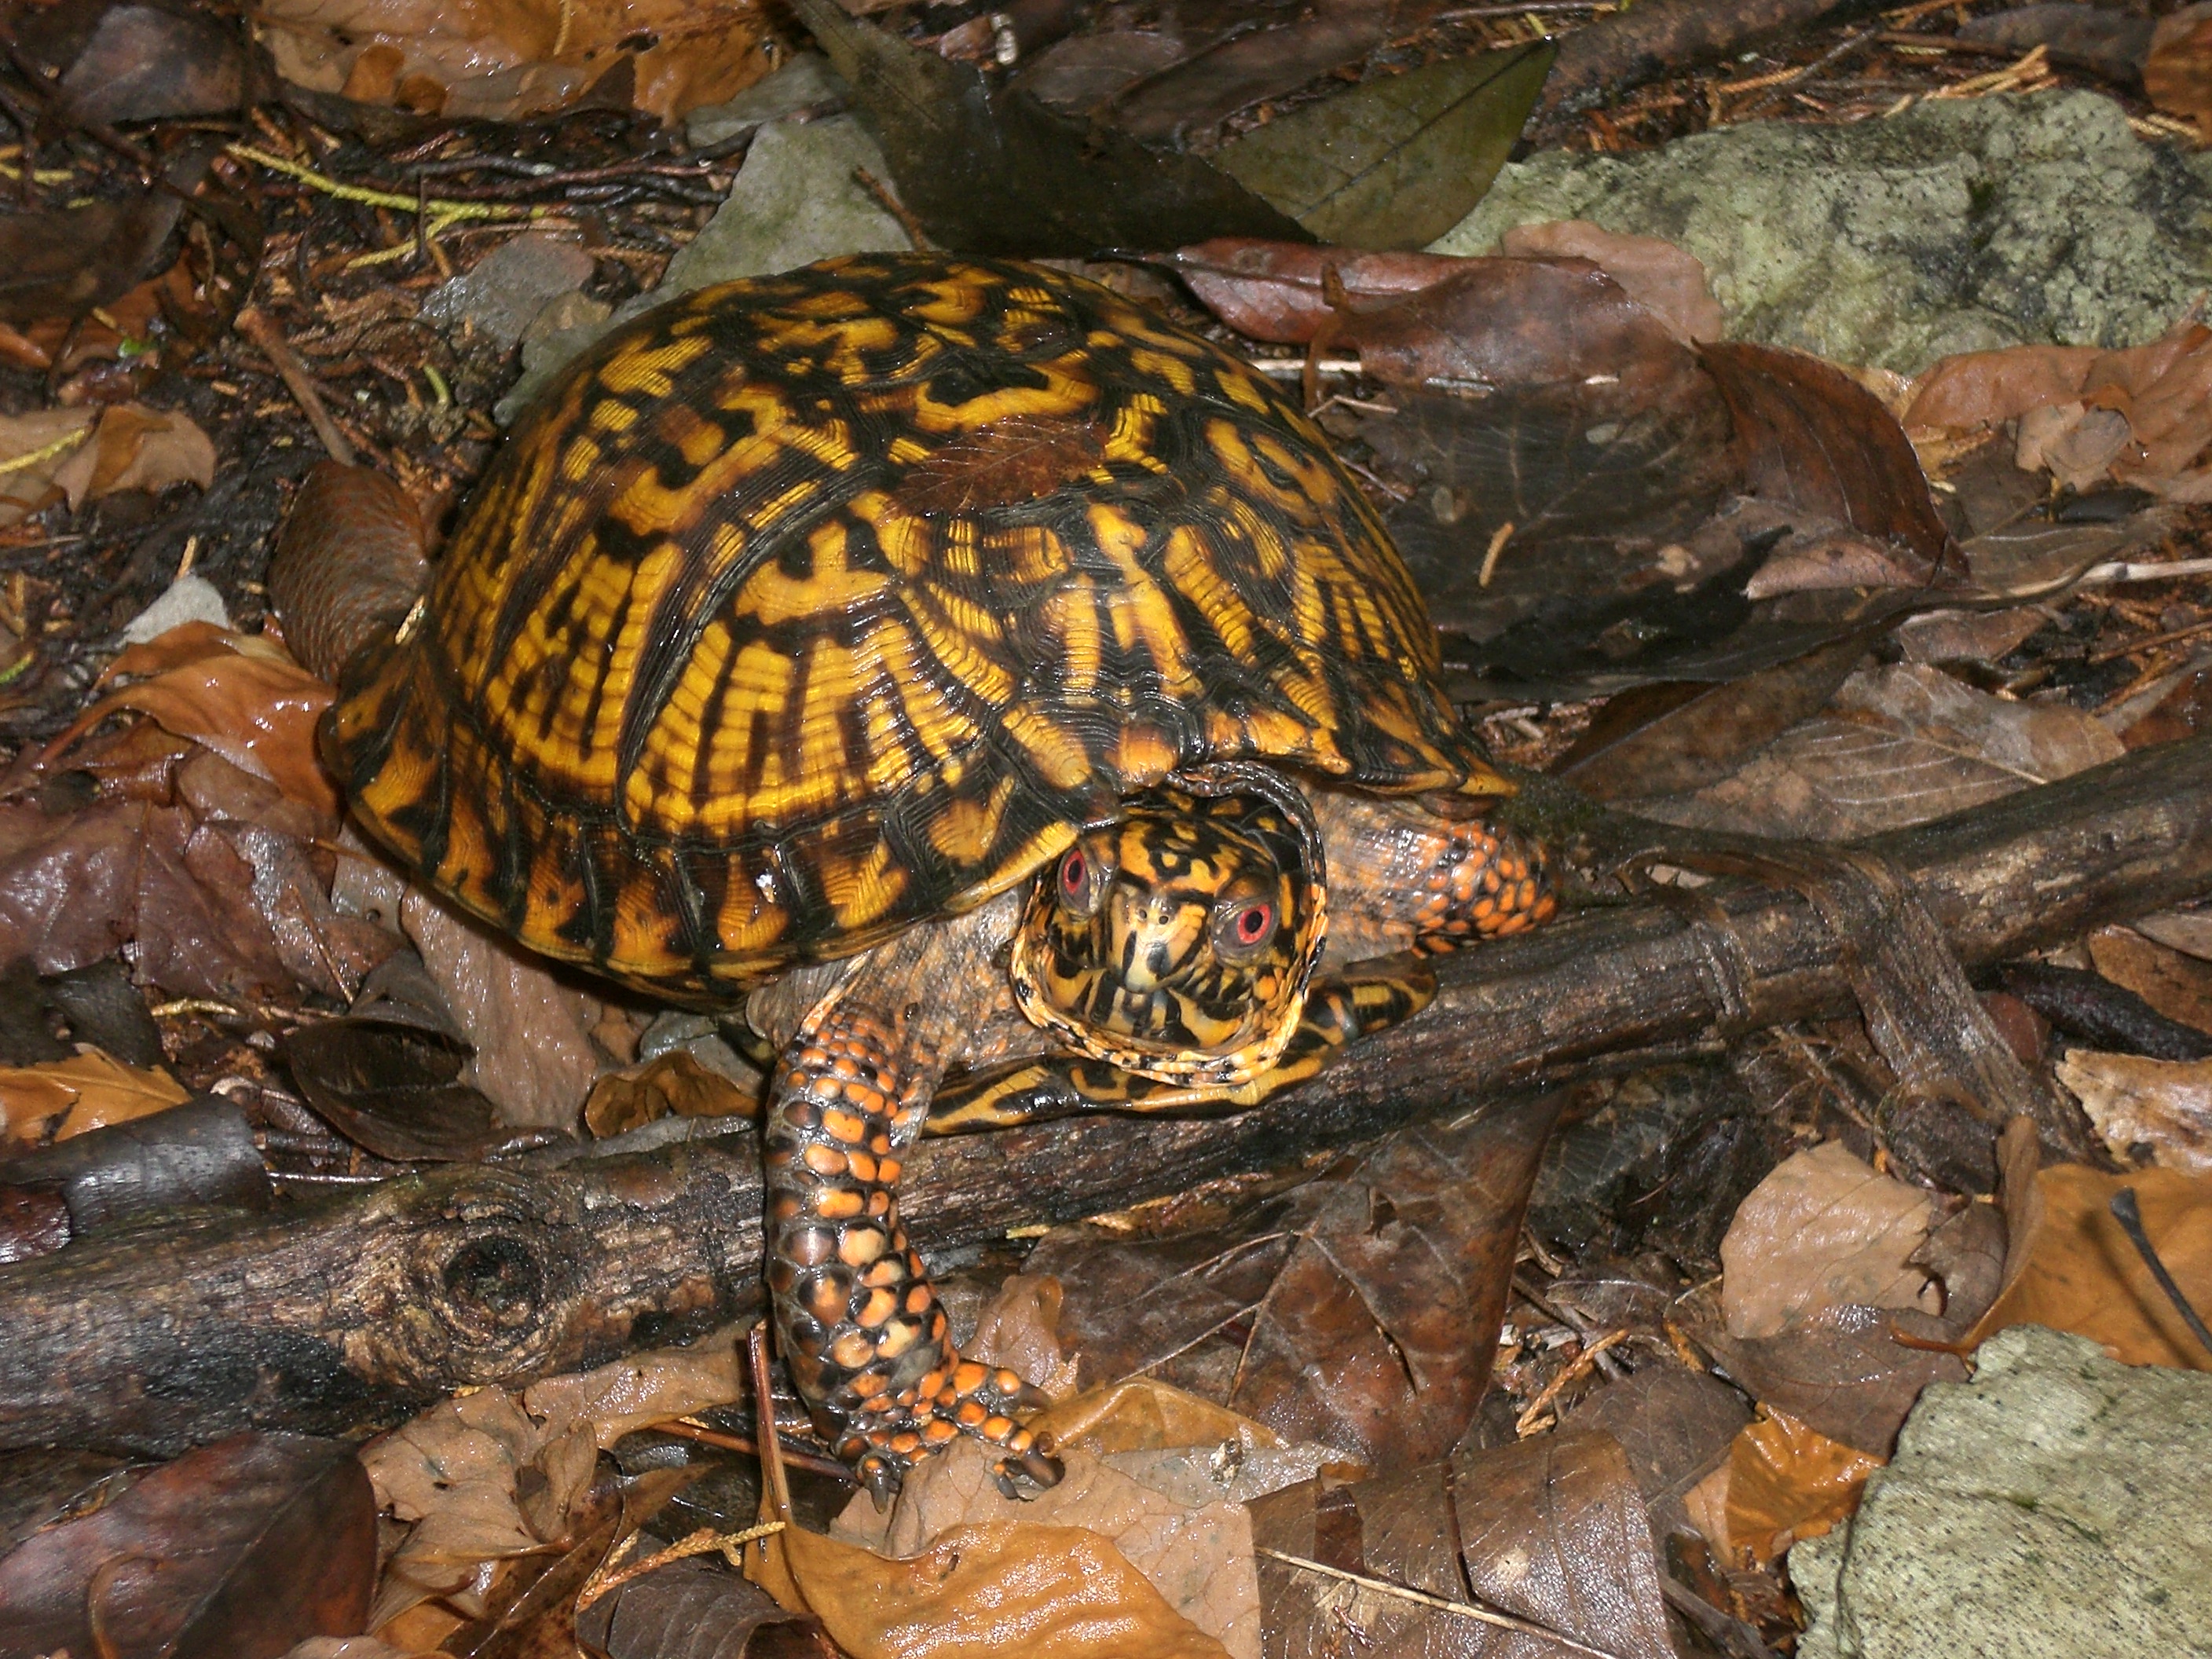 Eastern box turtle pic by C. Threadgill